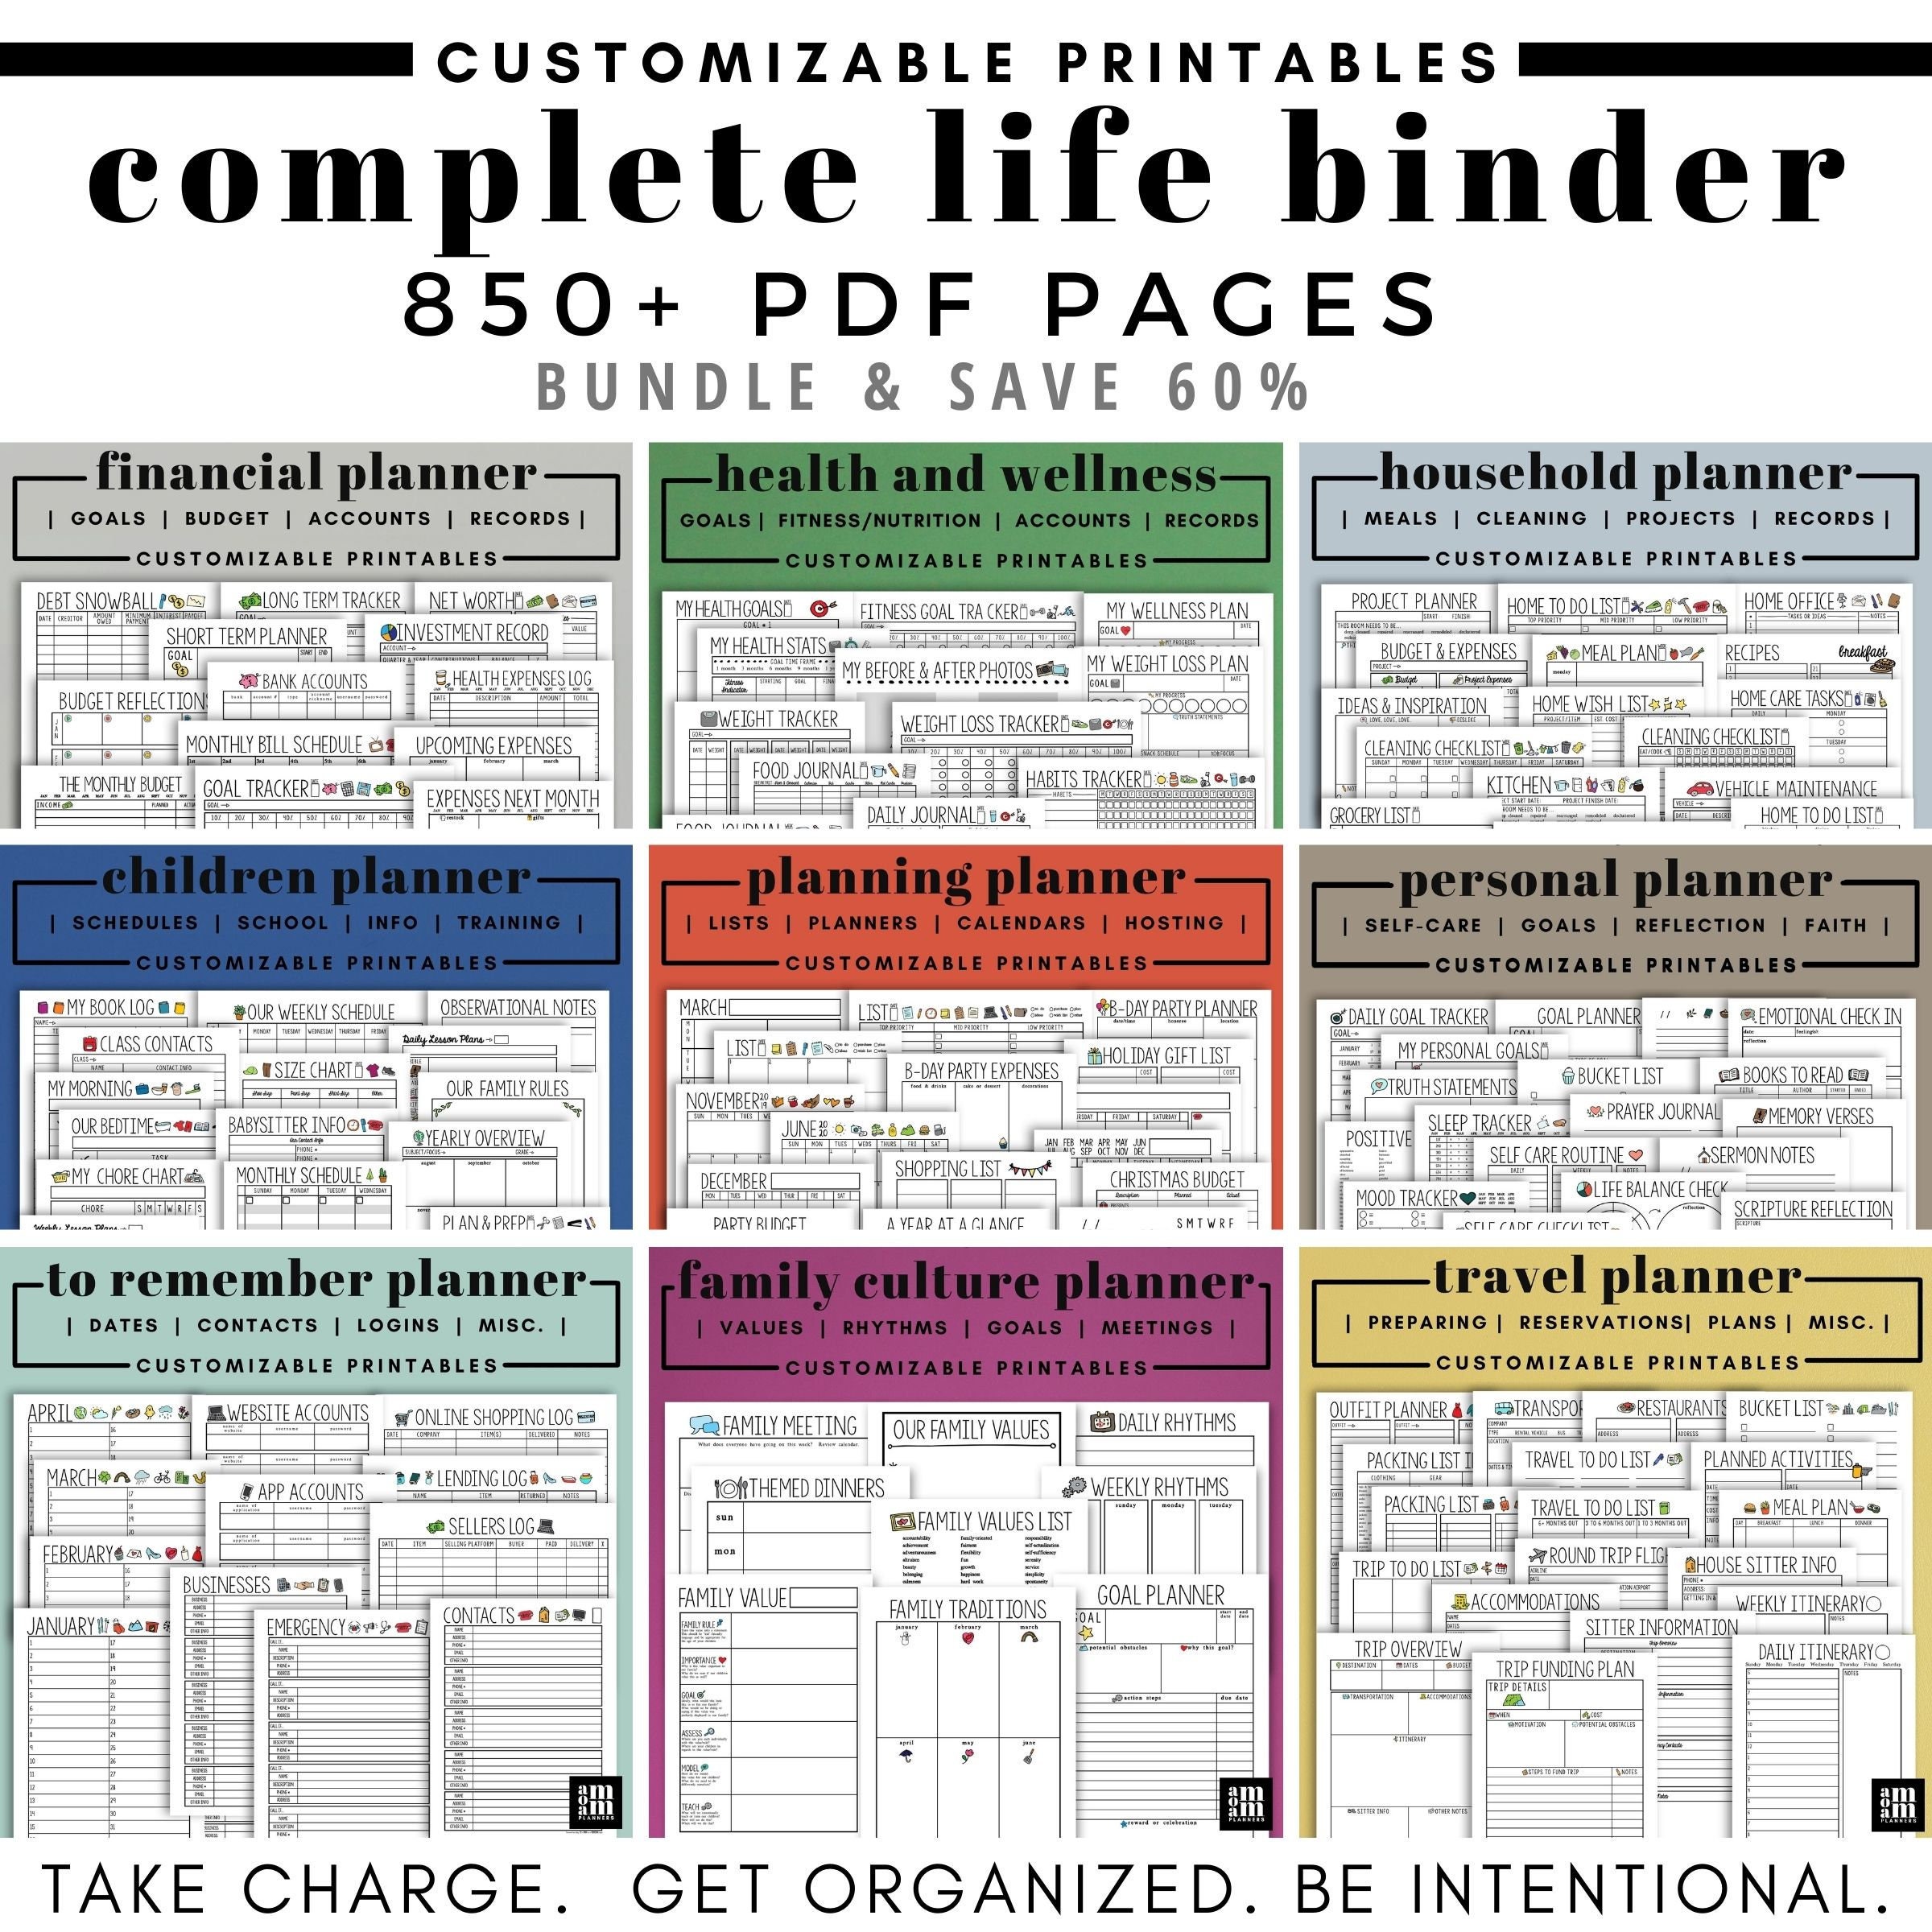 paper-party-supplies-printable-planner-home-management-binder-household-binder-printable